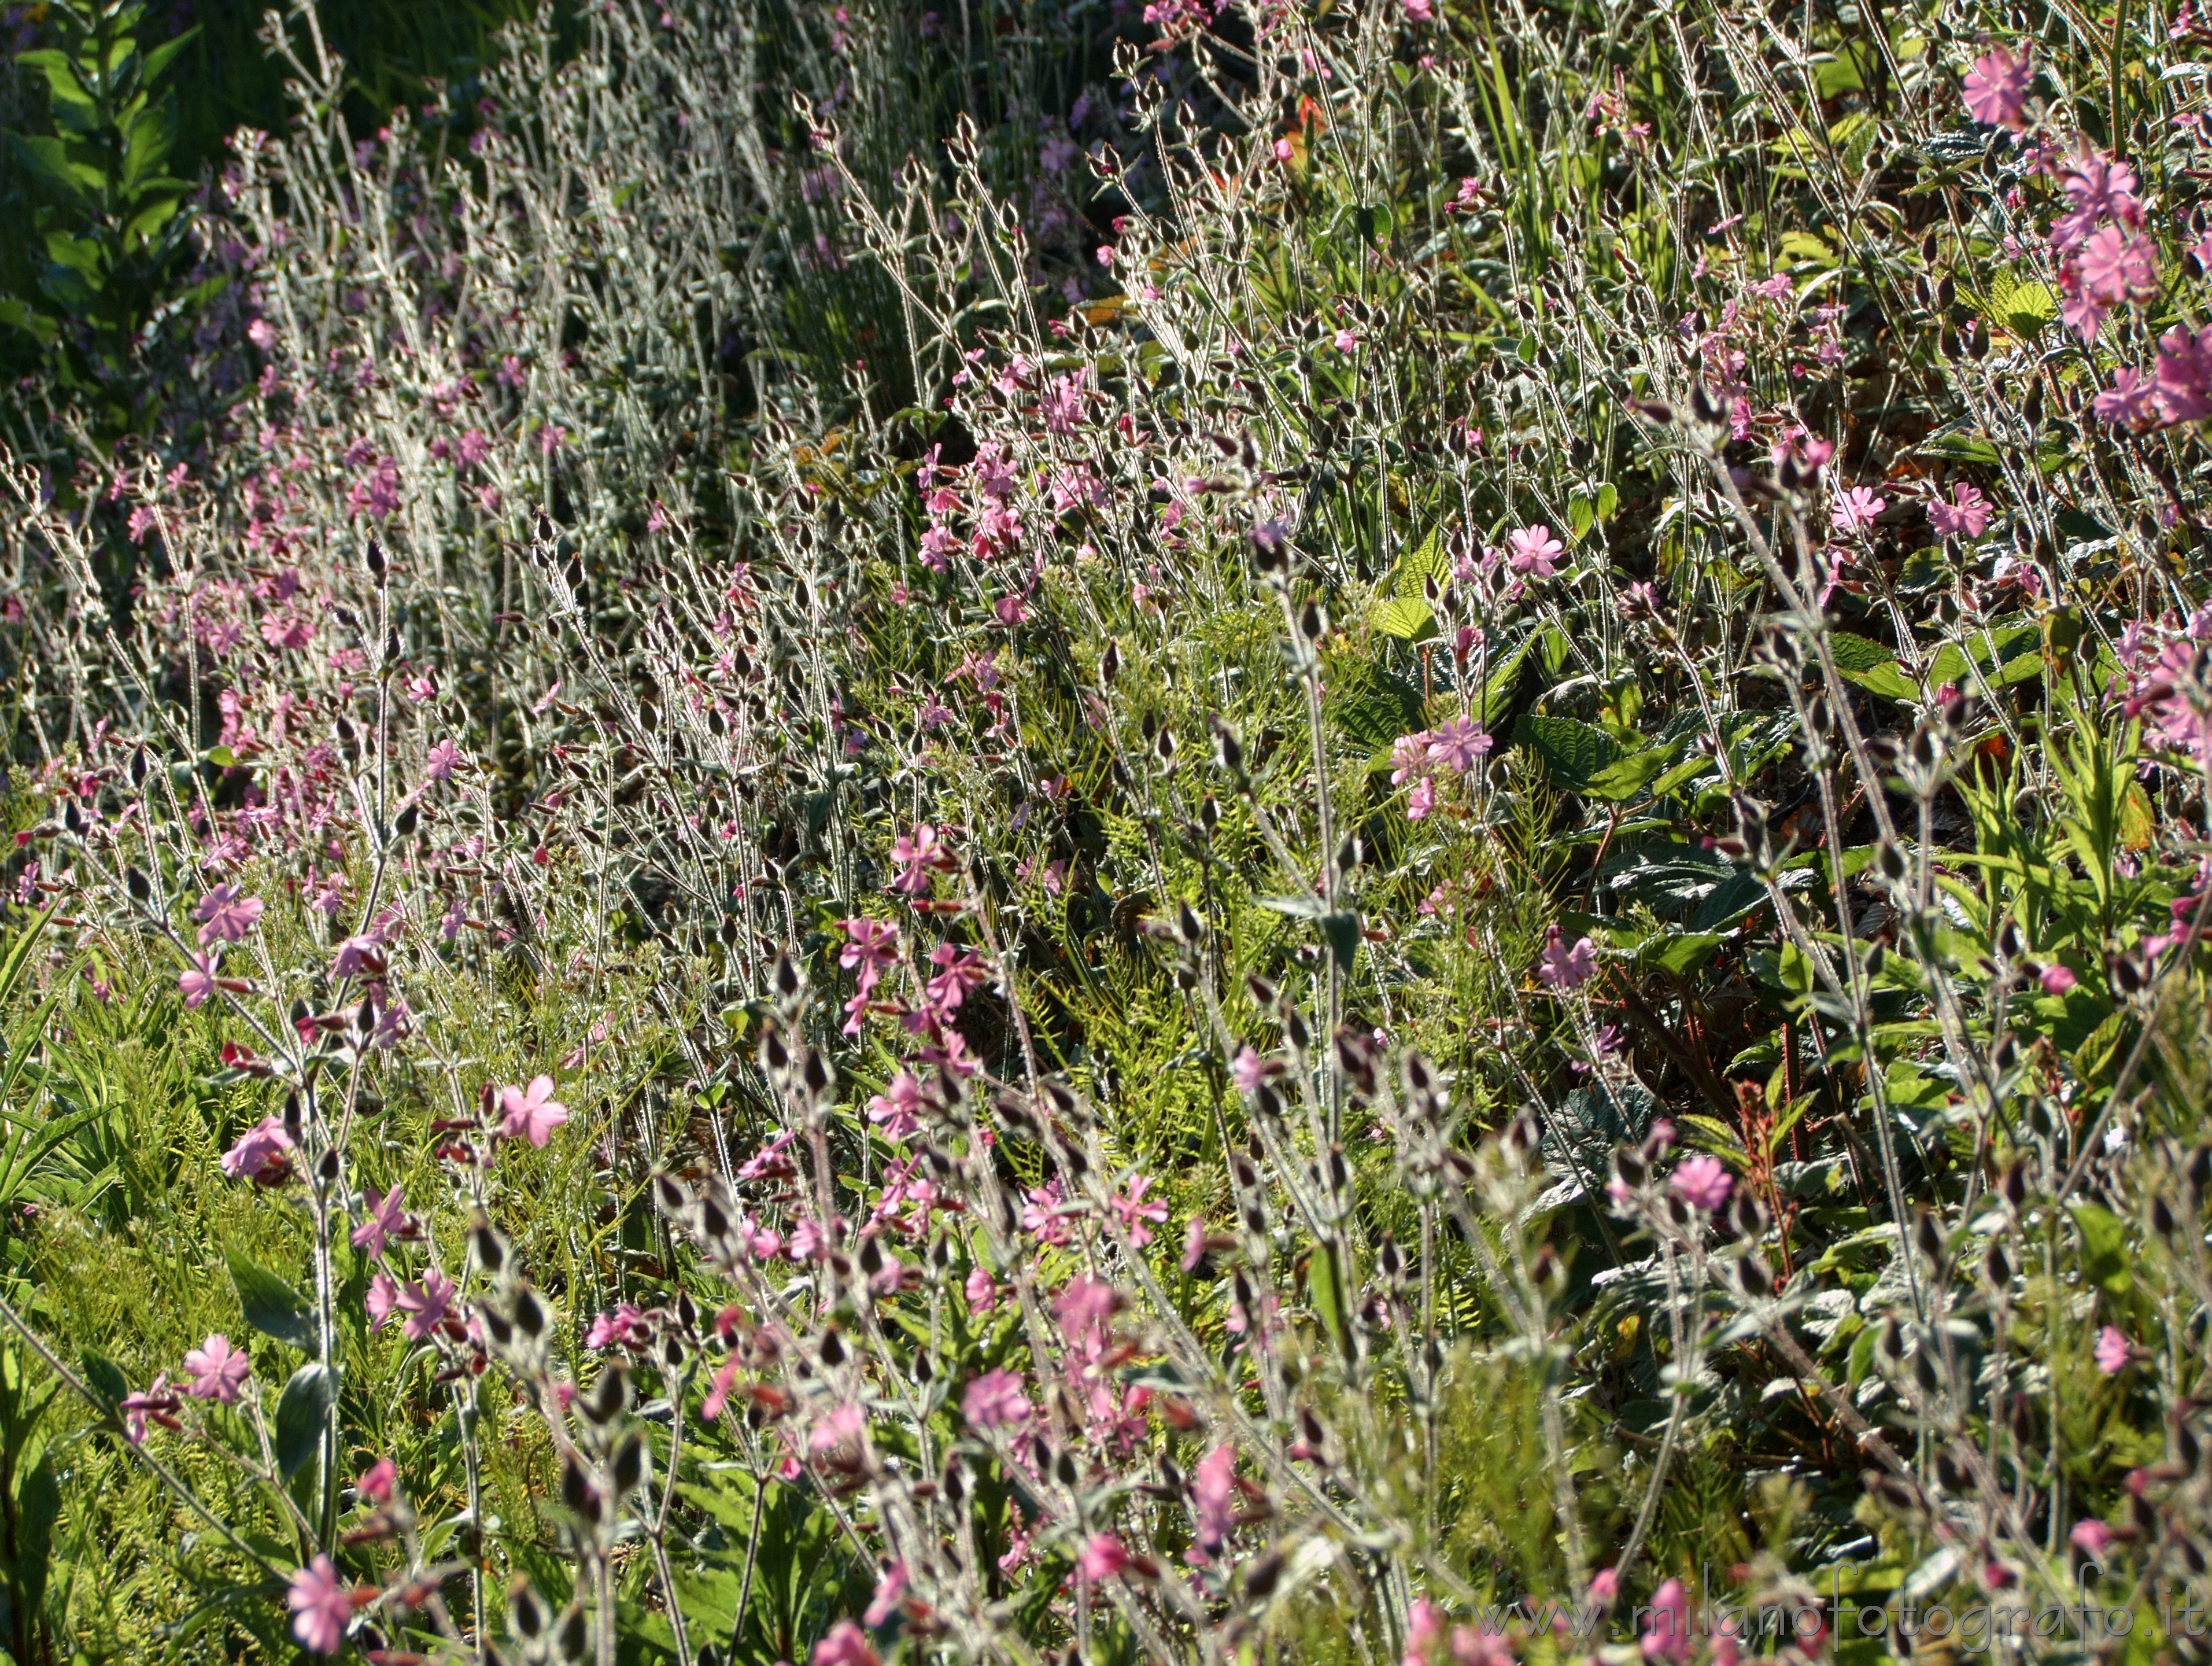 Rosazza (Biella, Italy): Meadow full of small flowers - Rosazza (Biella, Italy)